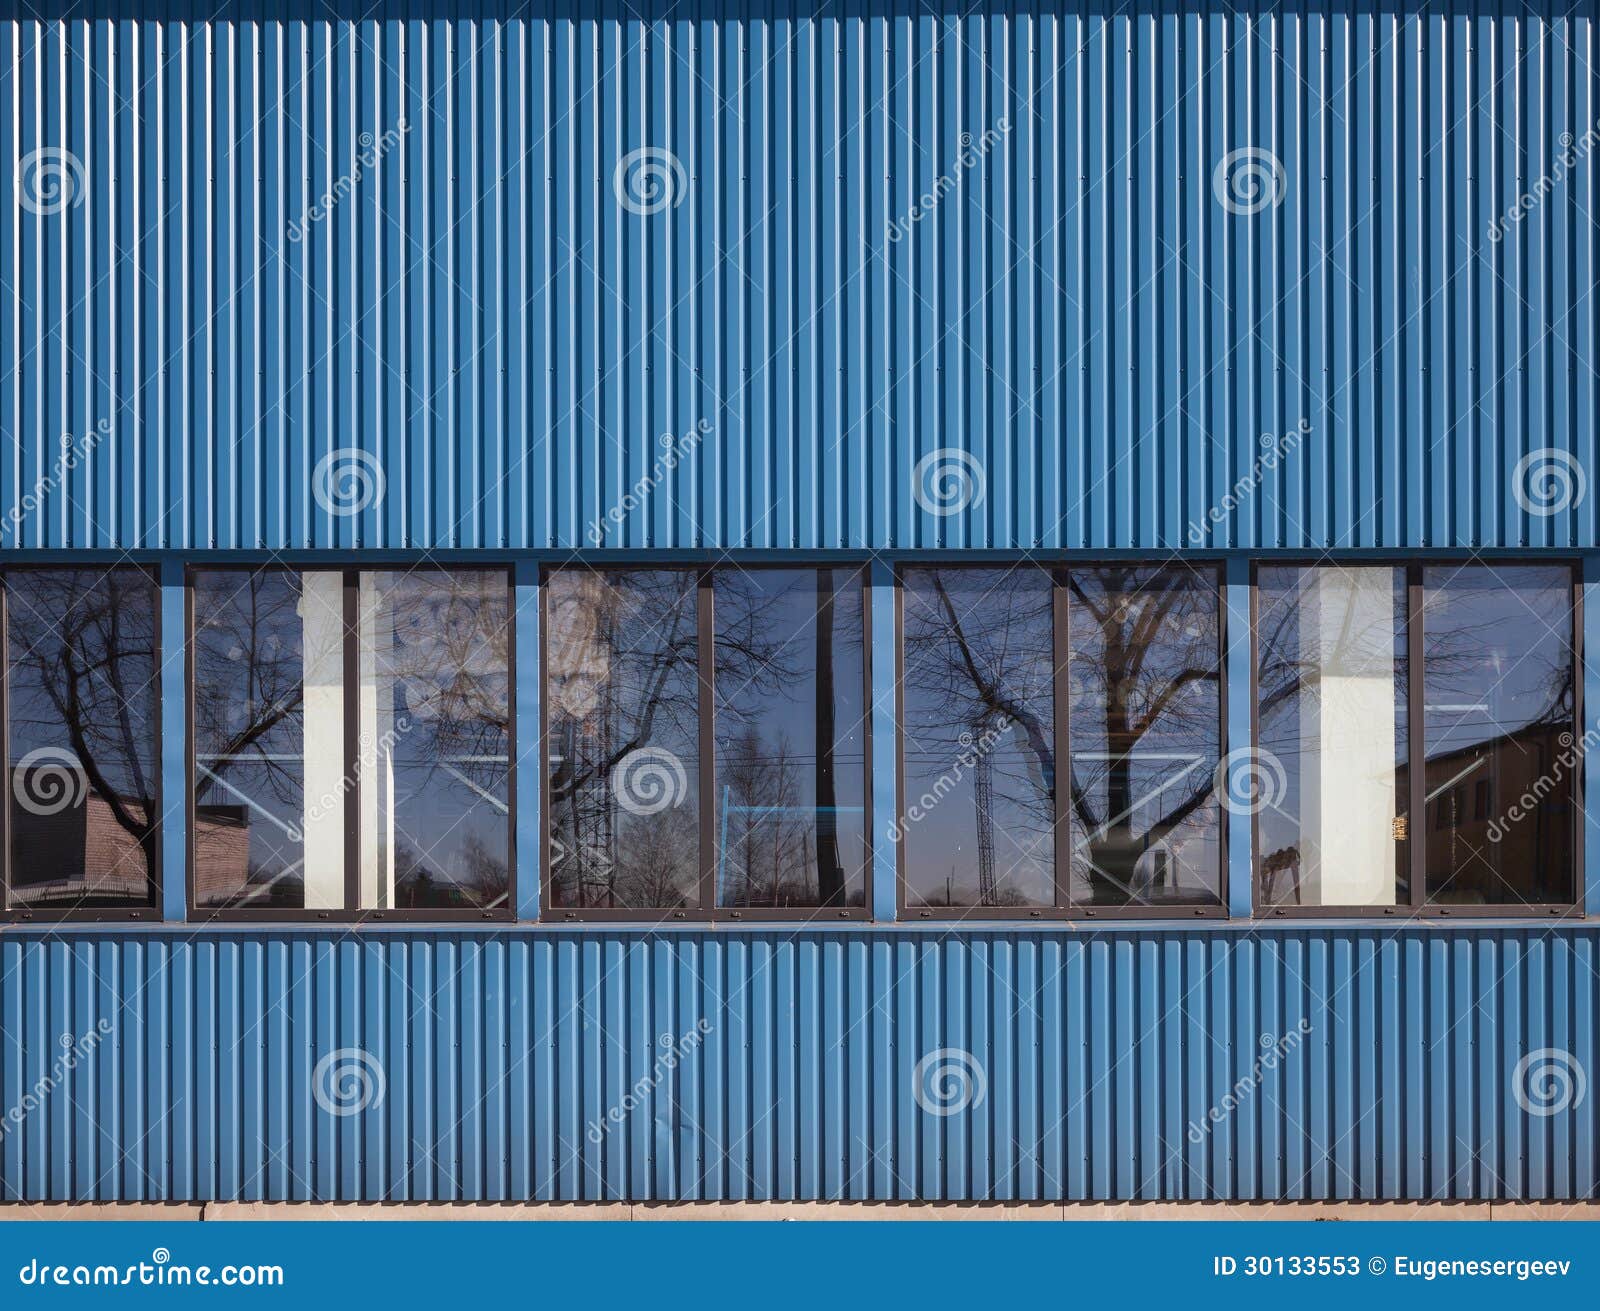 texture-industrial-storage-building-windows-metal-ridged-blue-wall ...